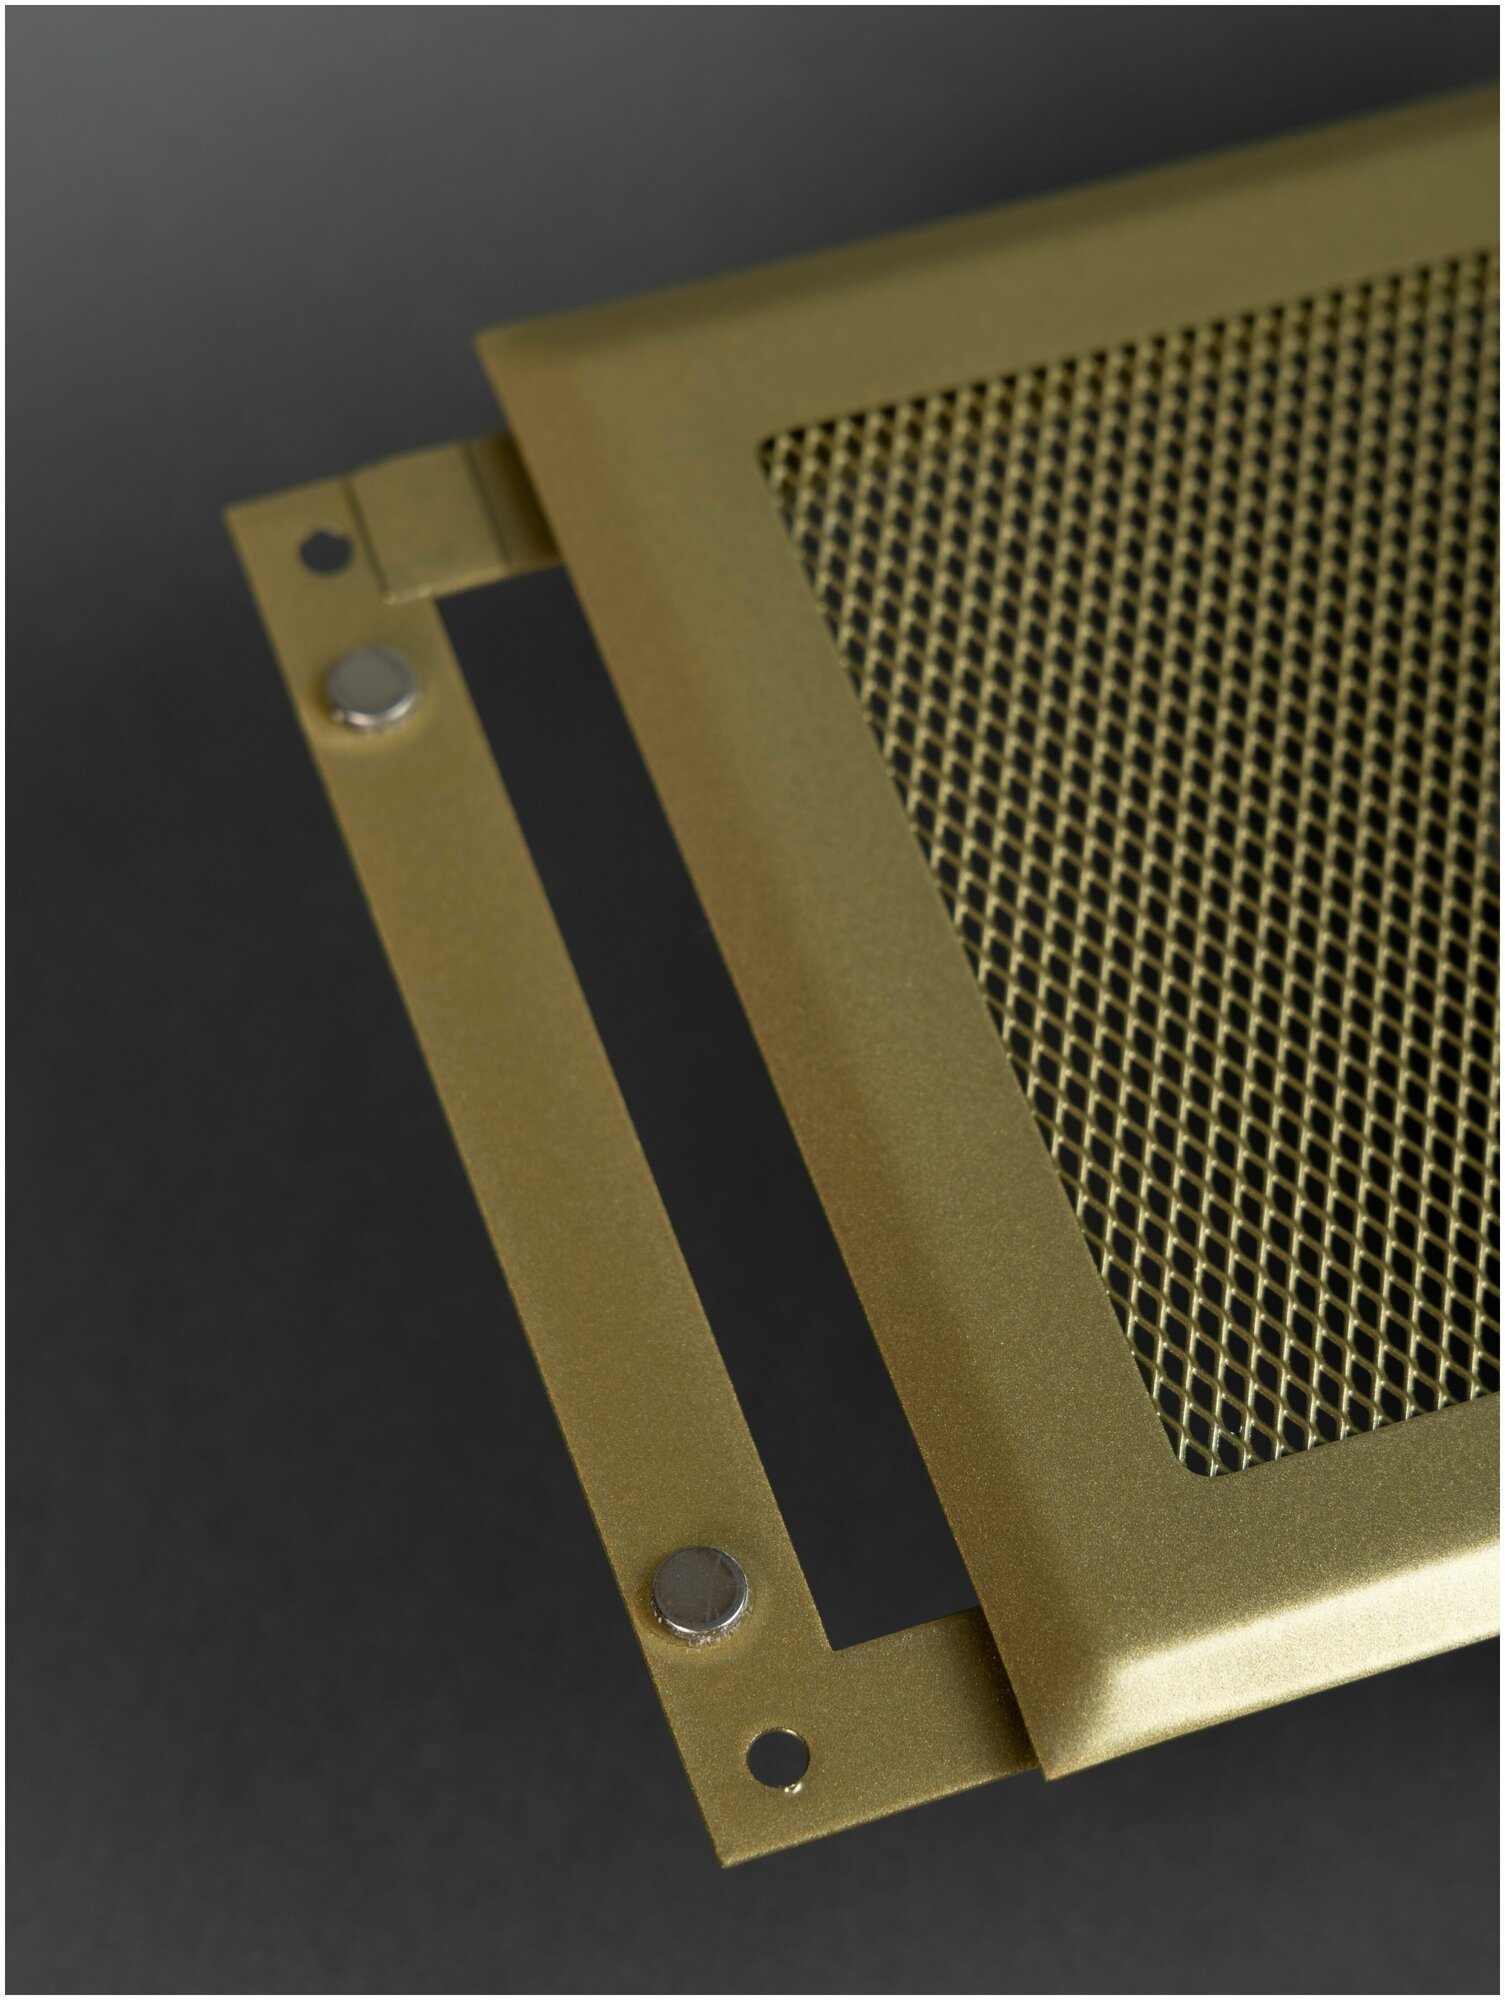 Решетка вентиляционная на магнитах 150x150 мм. съемная (РП150 Золотистая), металлическая, от производителя Родфер - фотография № 5